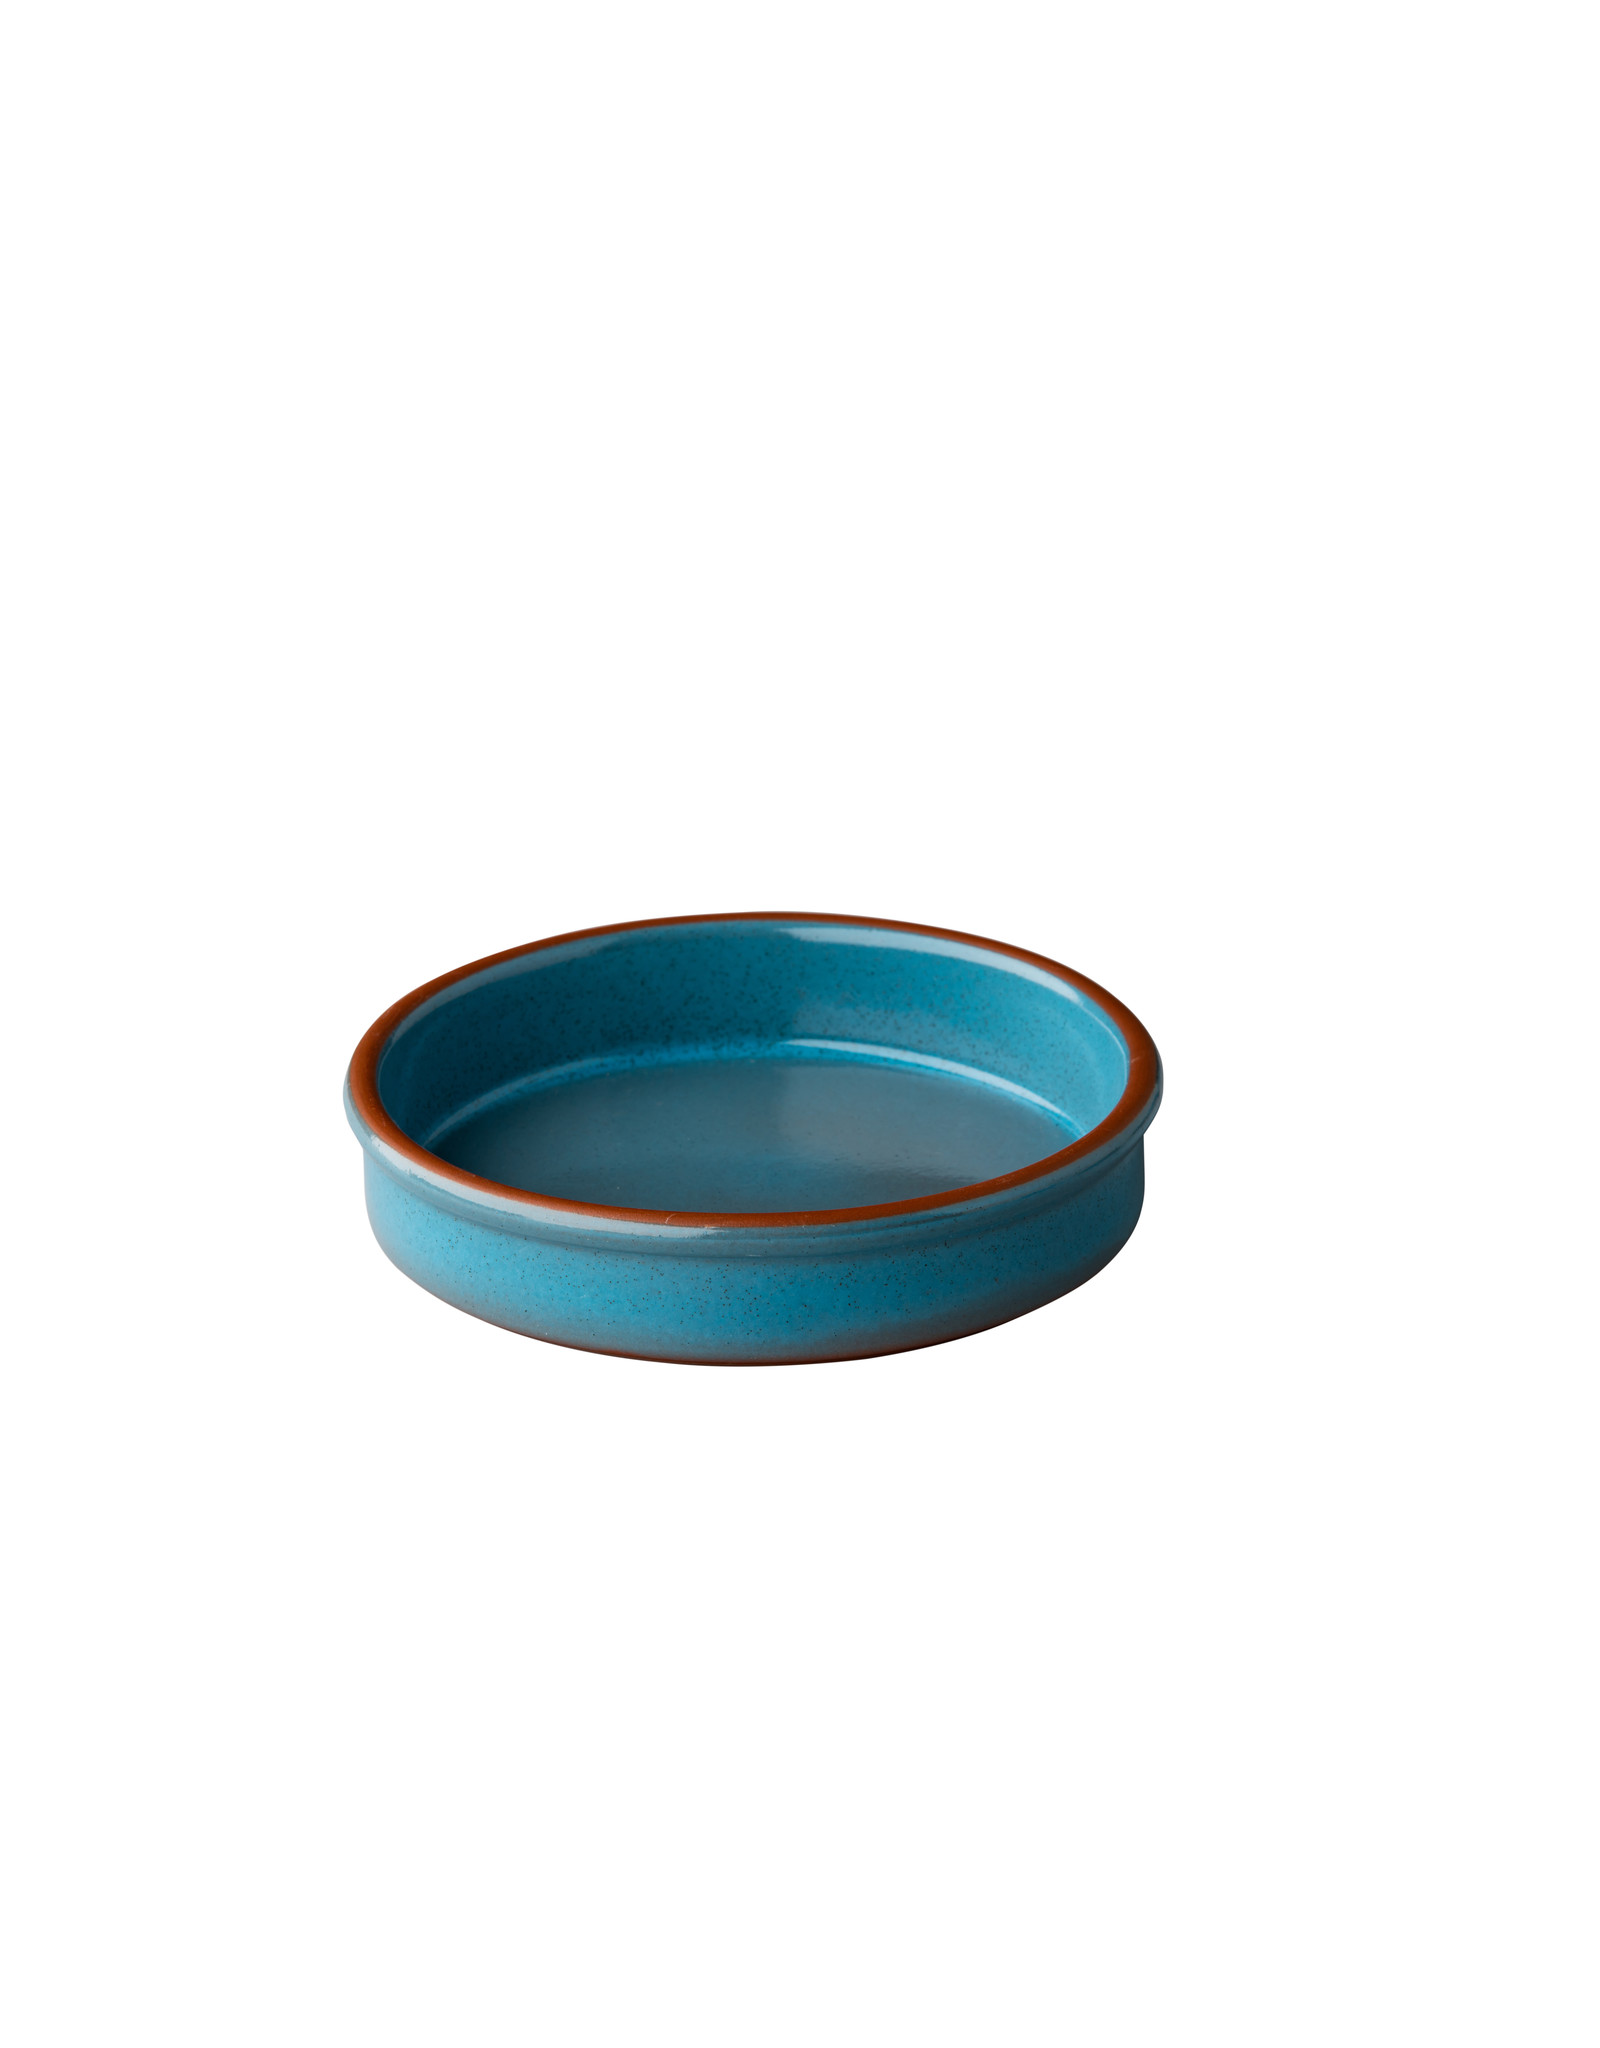 Stylepoint Stoneheart casserole   17 cm Blue